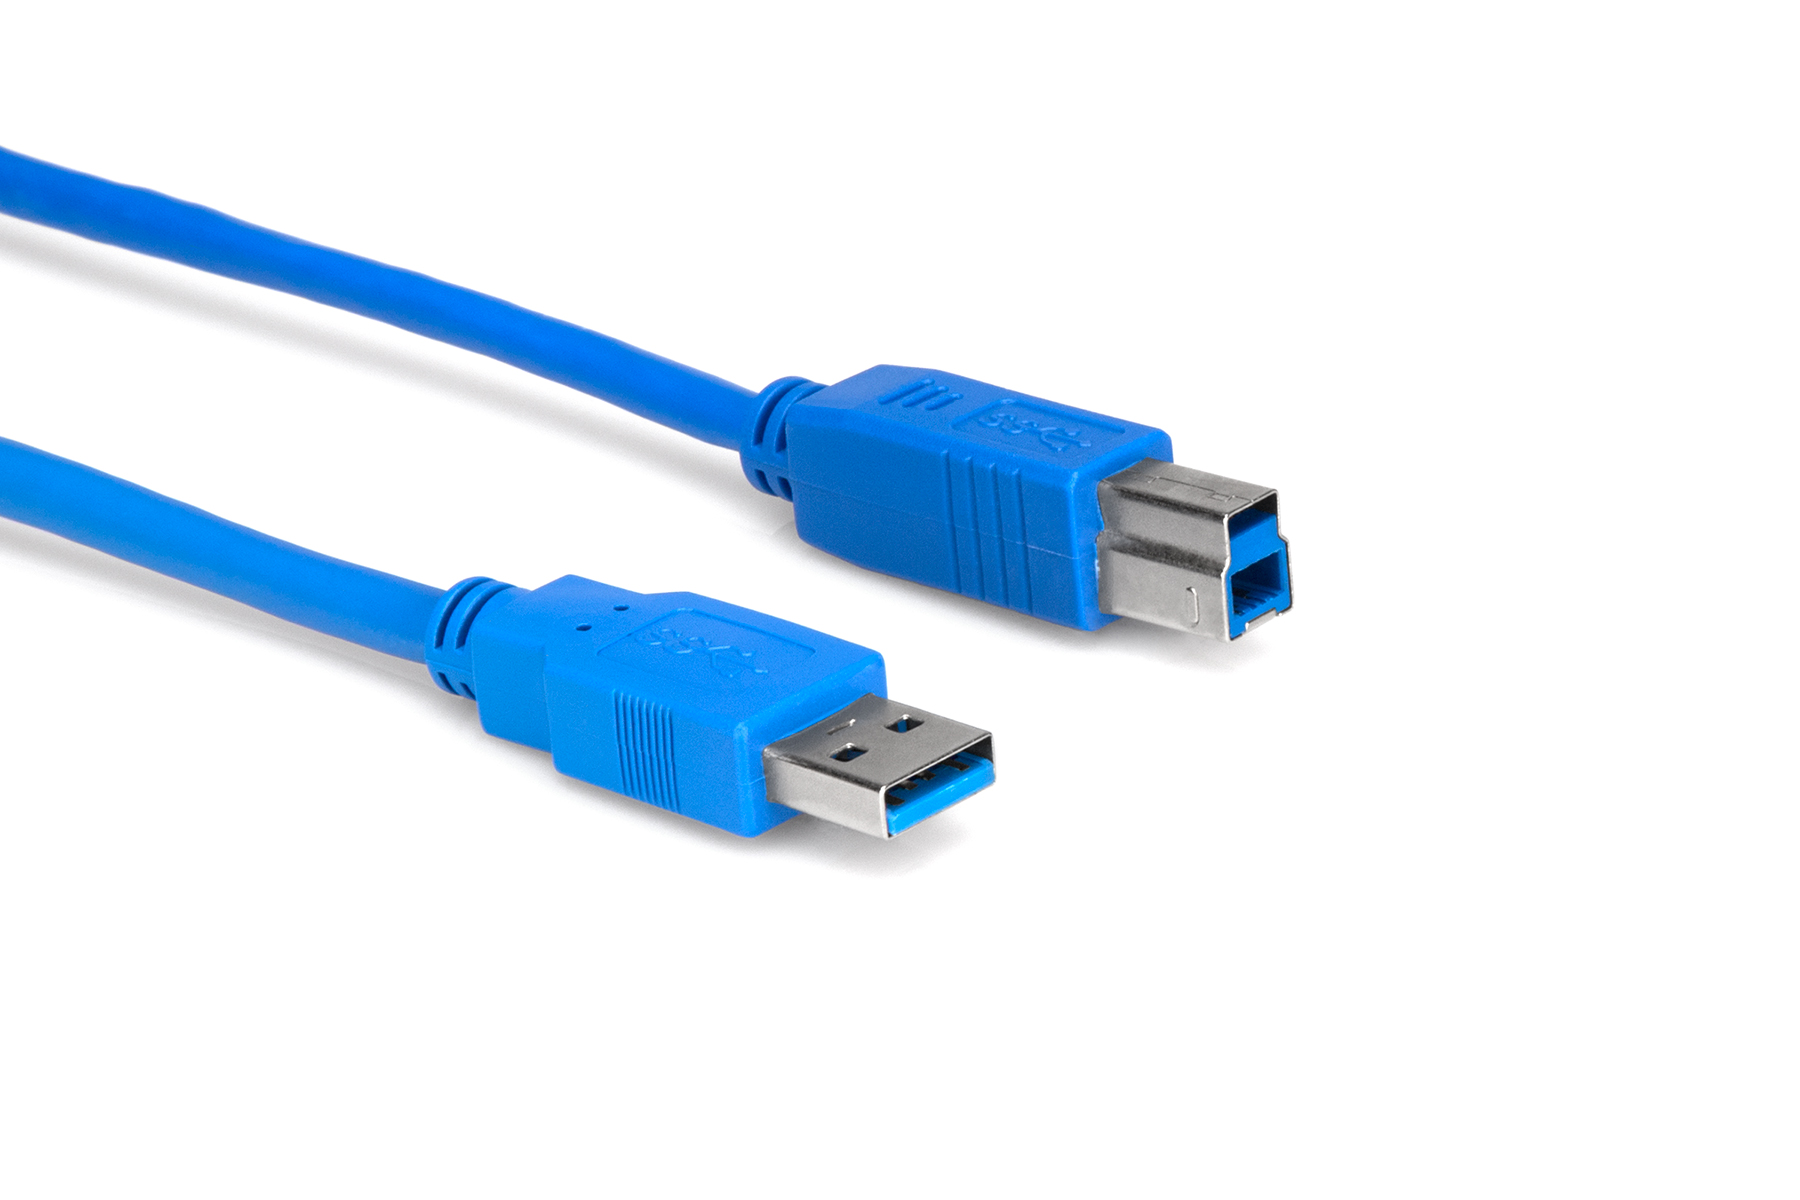 Zamtac Good Quality Blue Color USB 3.0 Printer Cable-SCLL Size: -, Color: Blue 